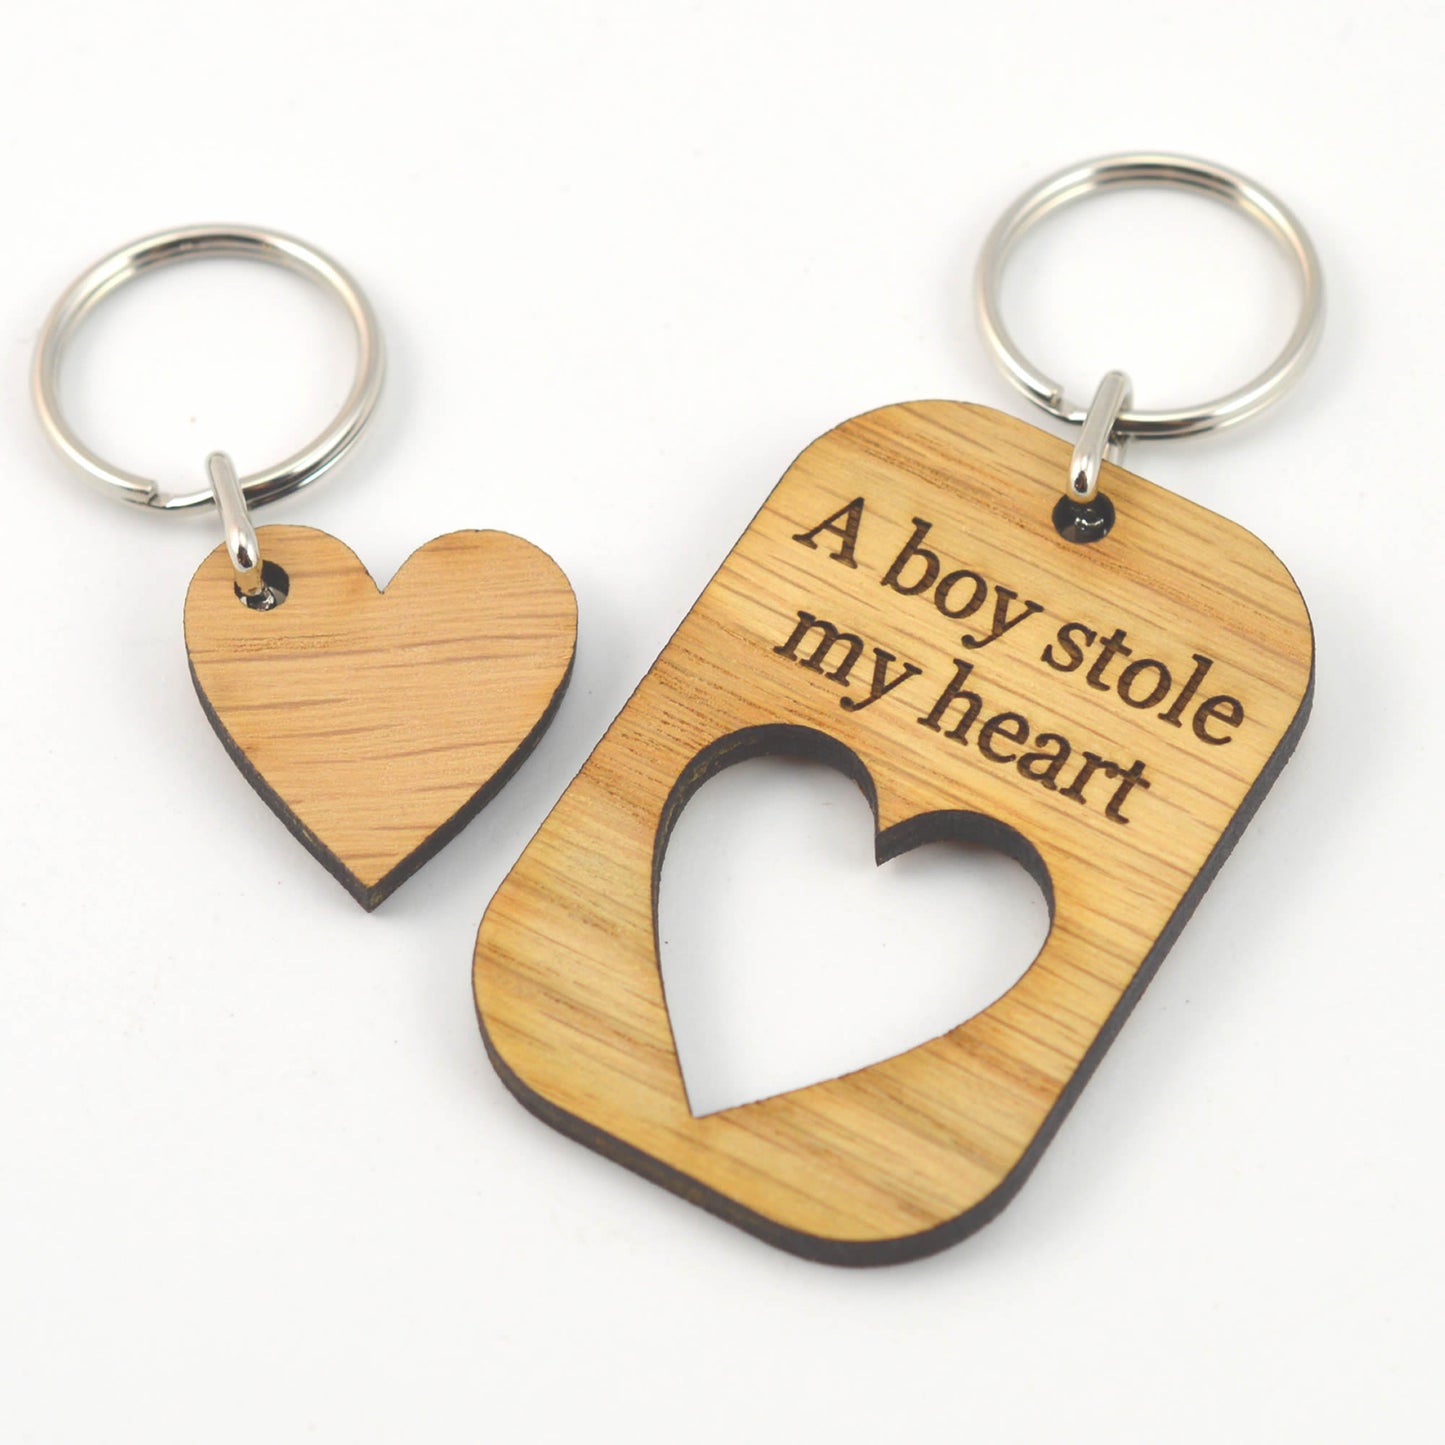 A BOY Stole My HEART - Valentines Day Keyring Set Gift For Boyfriend / Husband